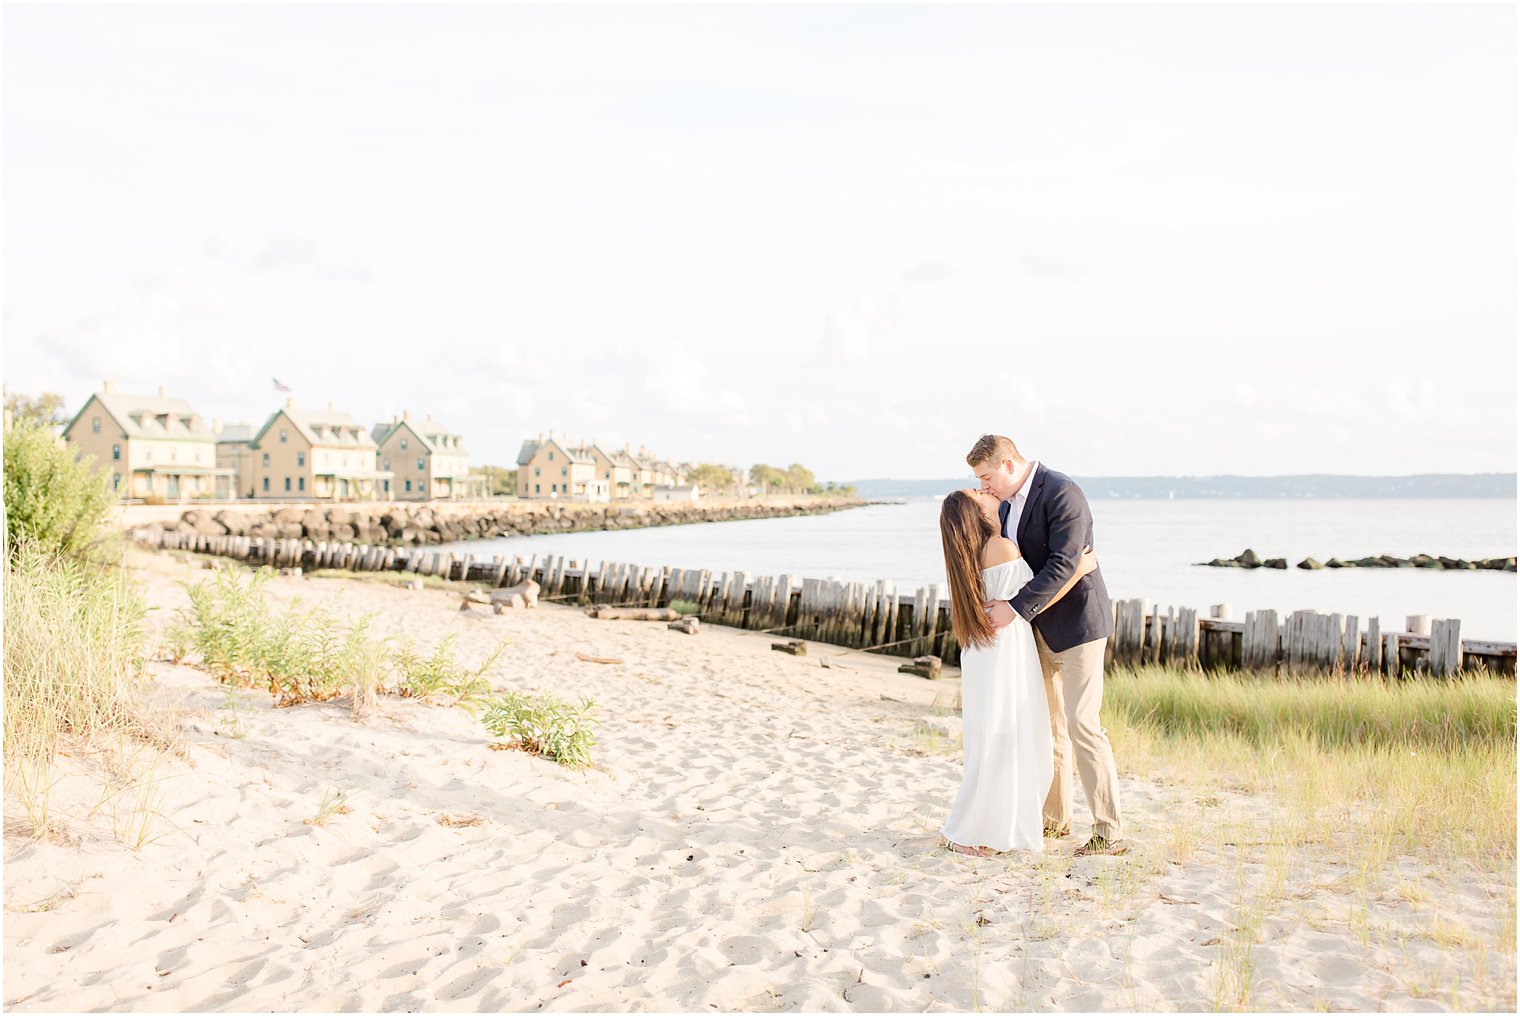 Engagement photos at Sandy Hook